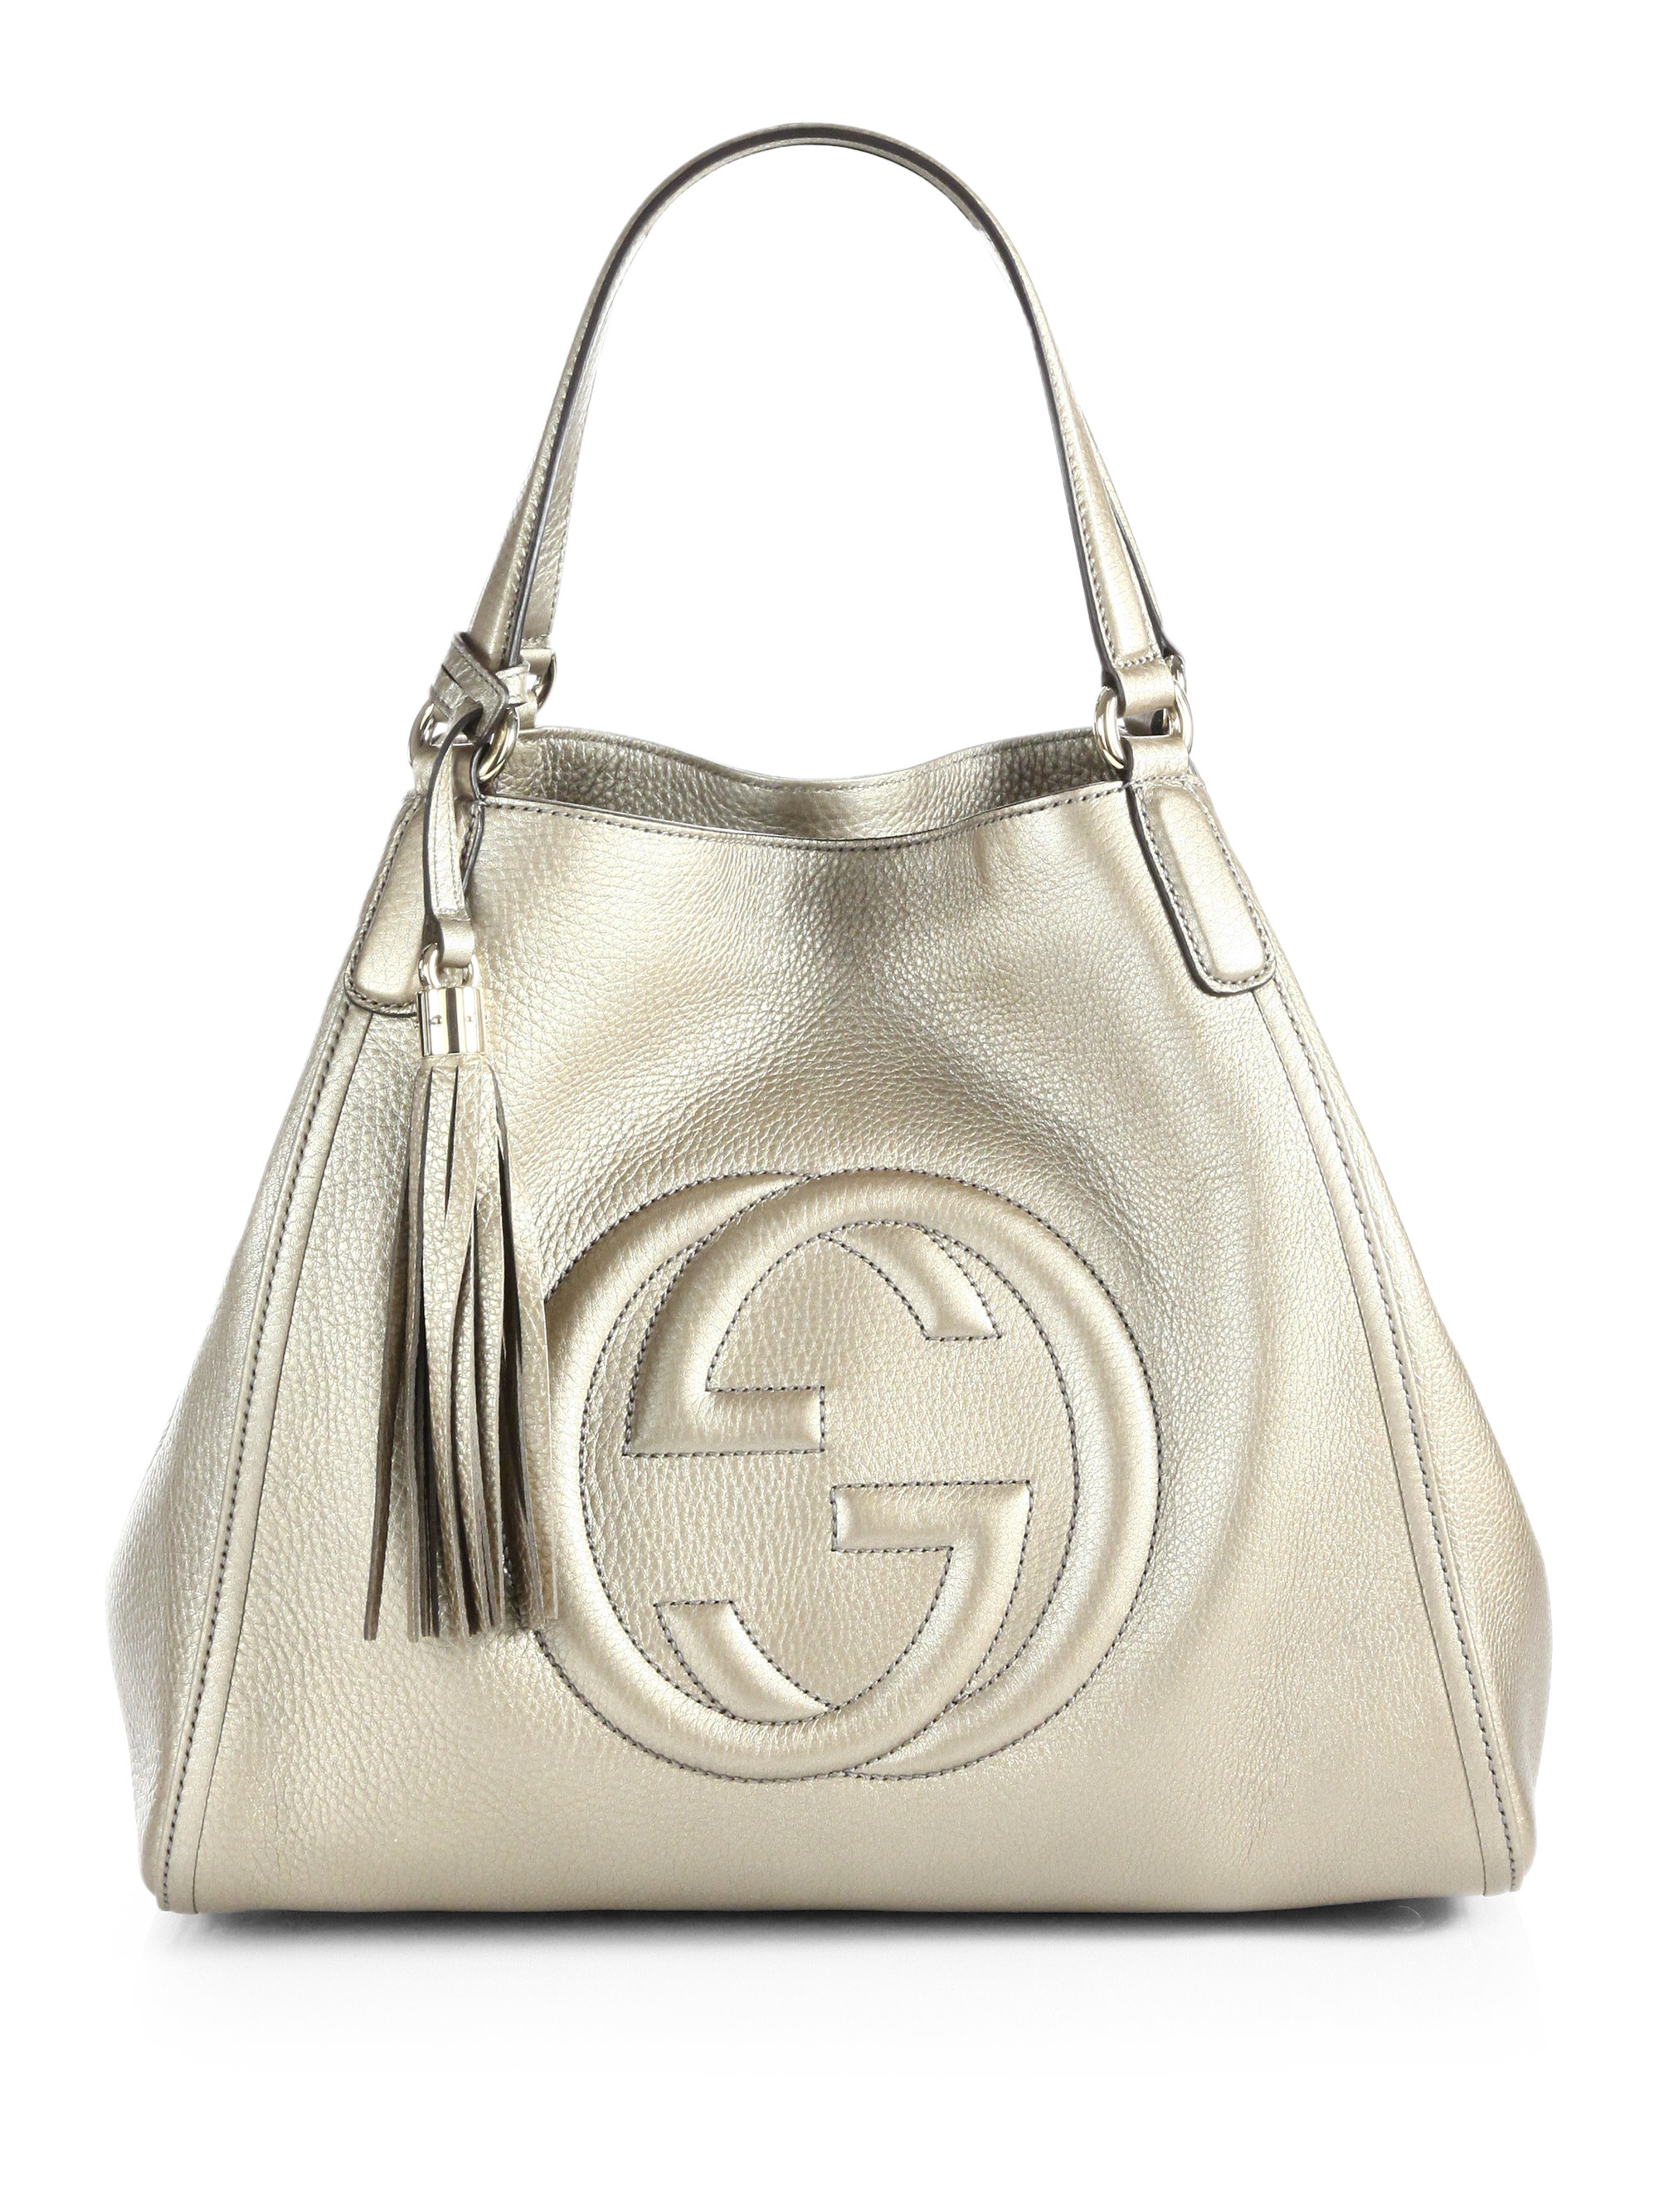 Gucci Soho Metallic Leather Shoulder Bag in White (SUGAR) | Lyst